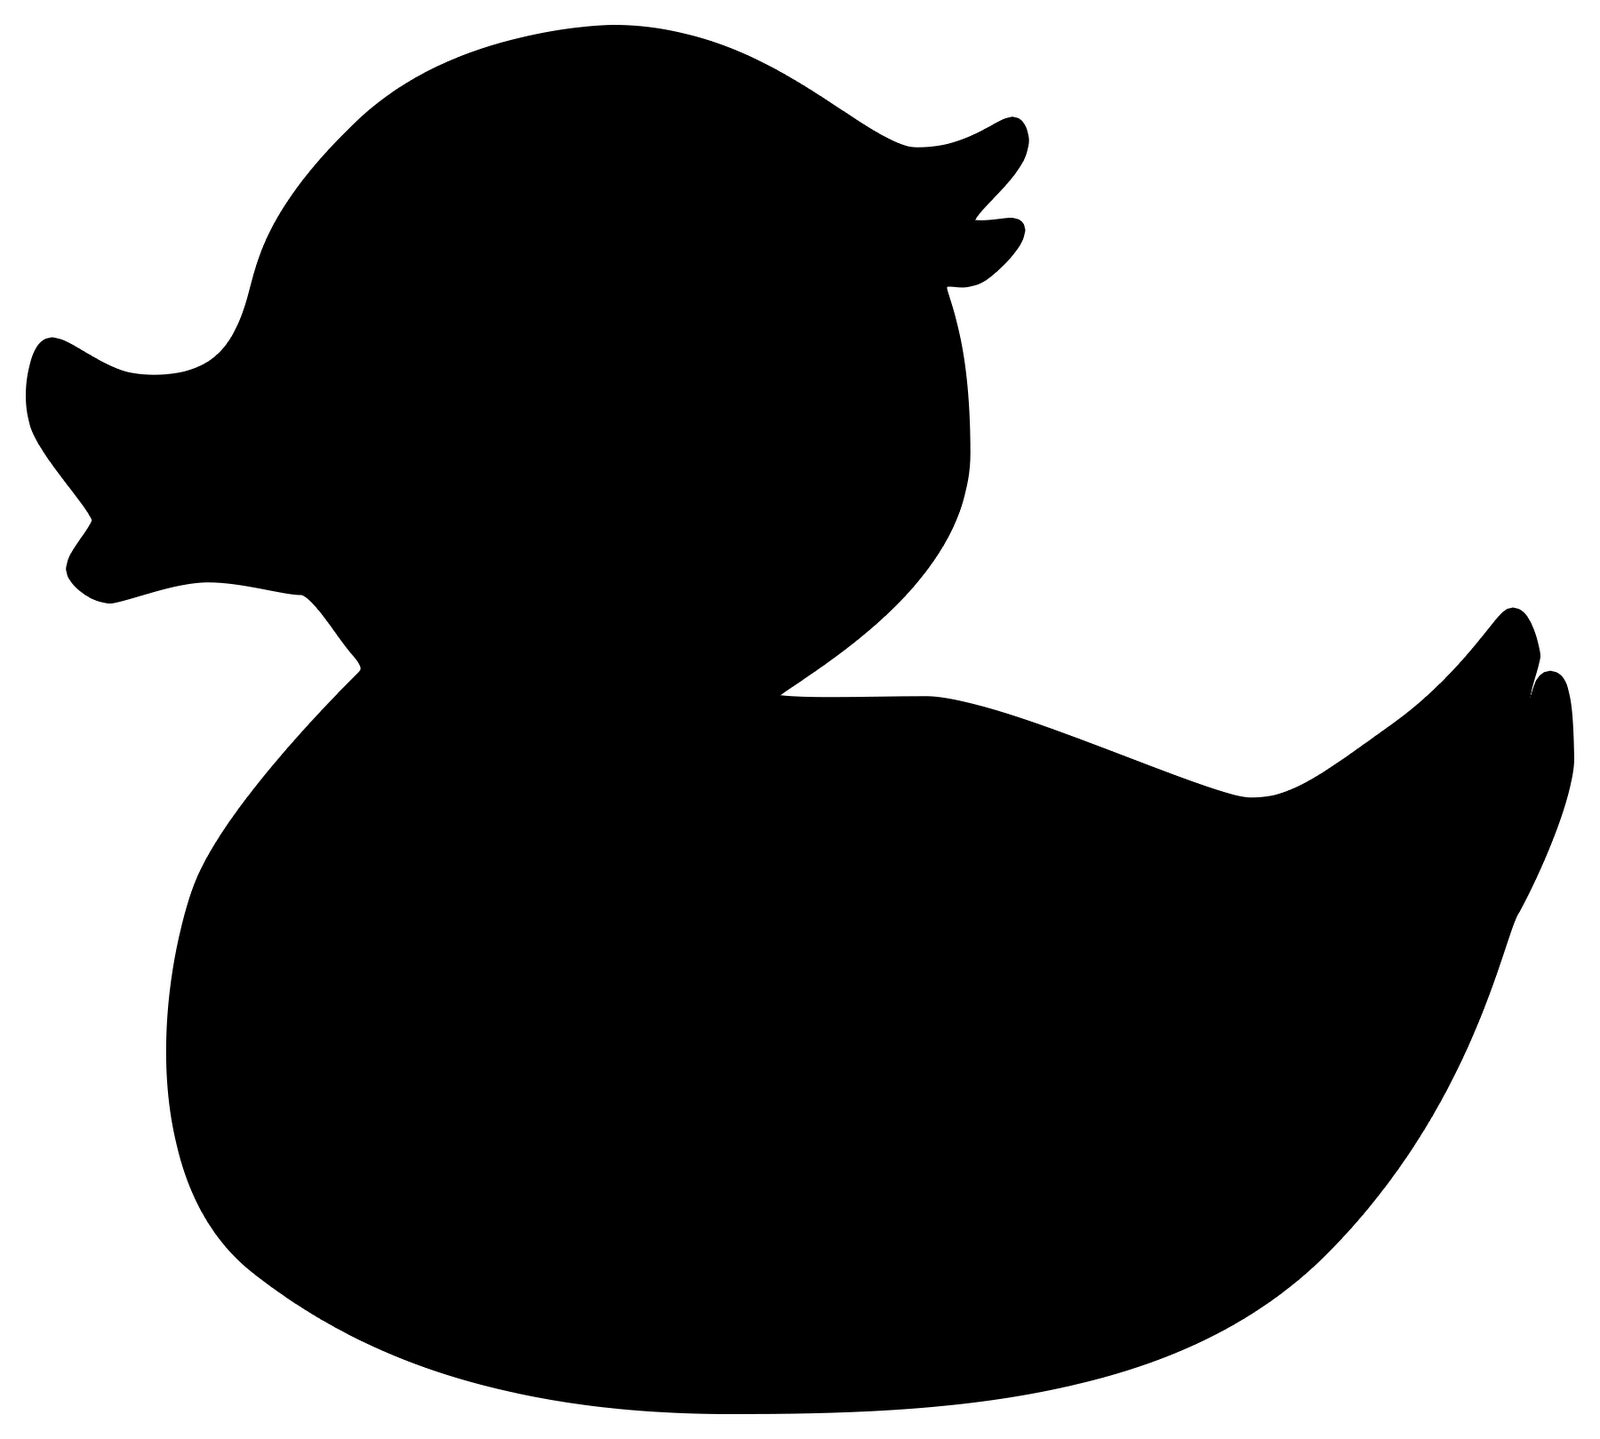 Rubber Duck Silhouette Clipart